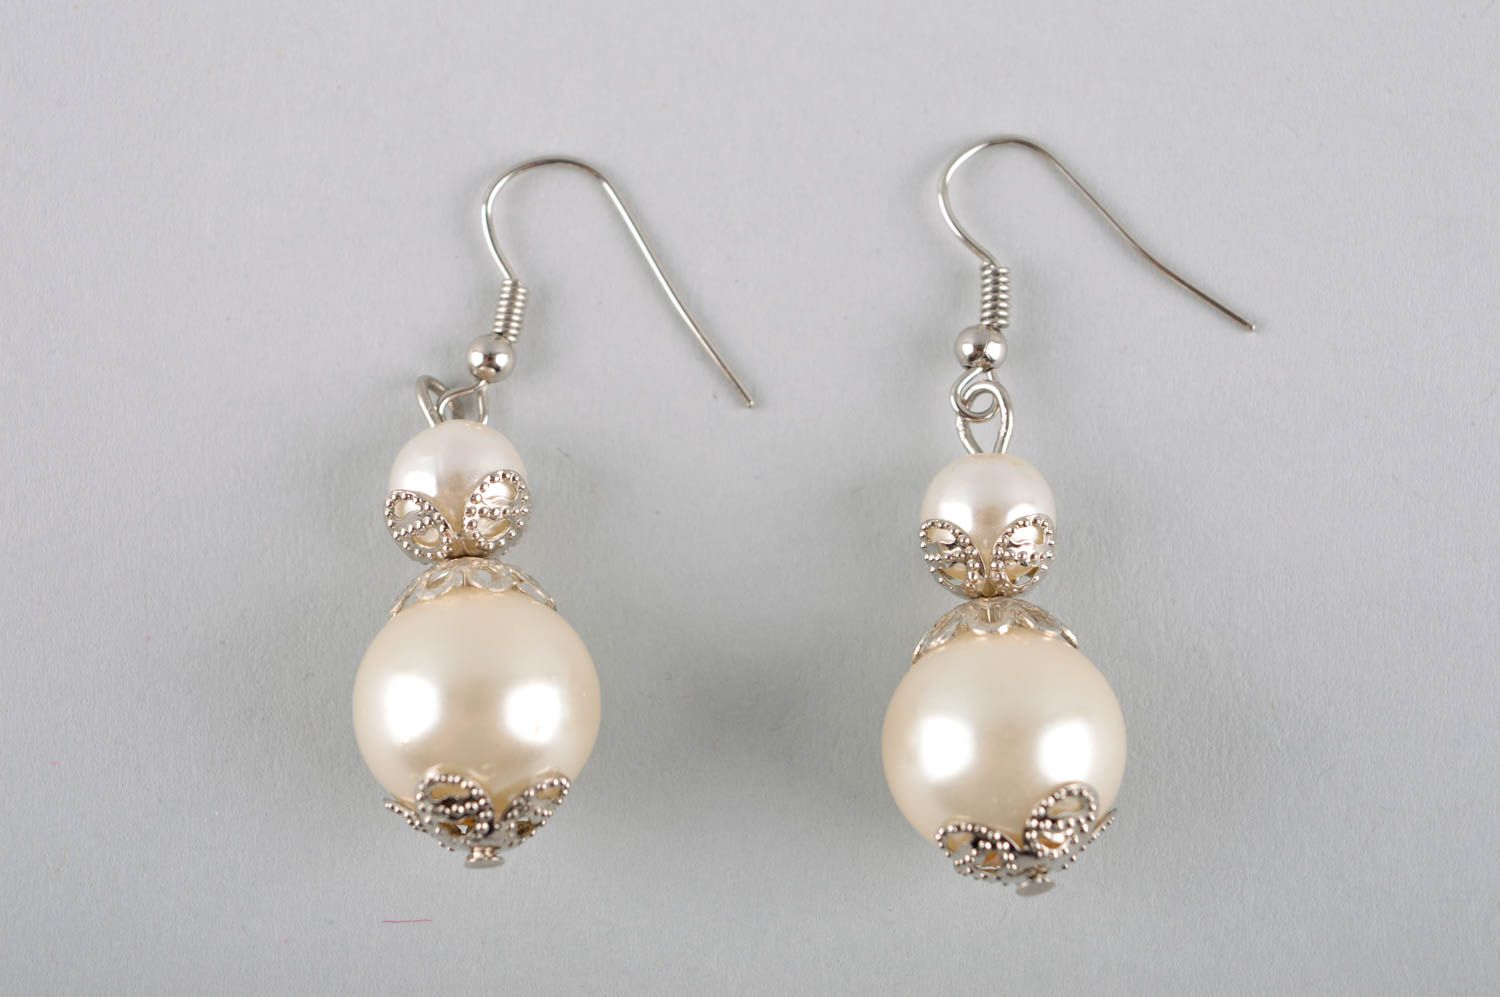 Homemade jewelry designer earrings cute earrings fashion accessories gift ideas photo 3